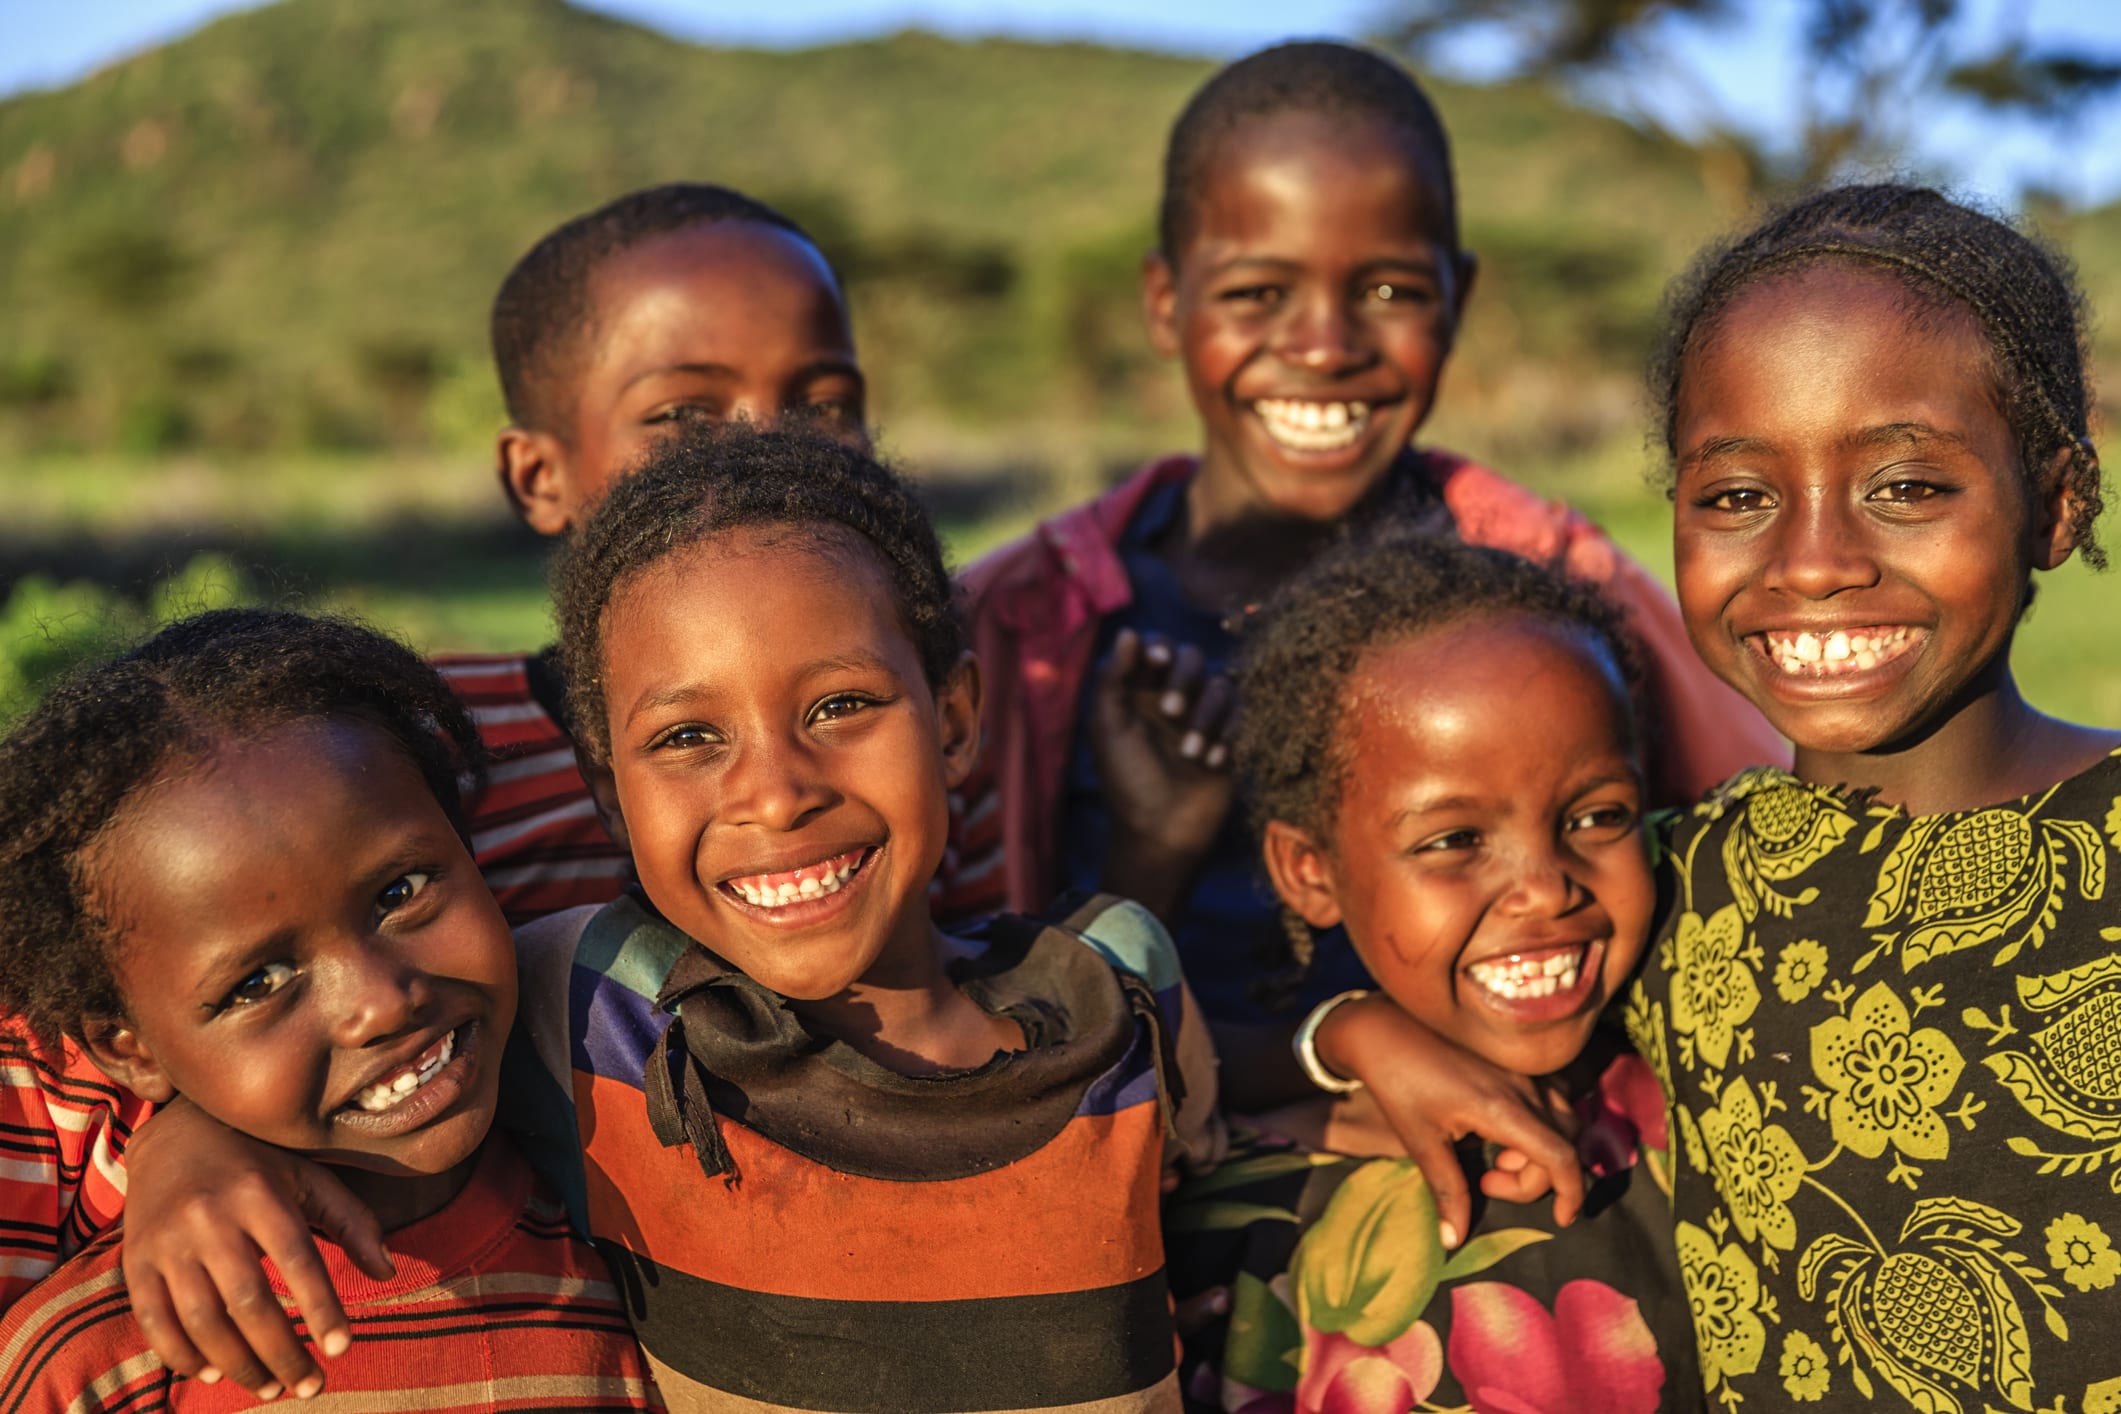 Glada barn i afrika